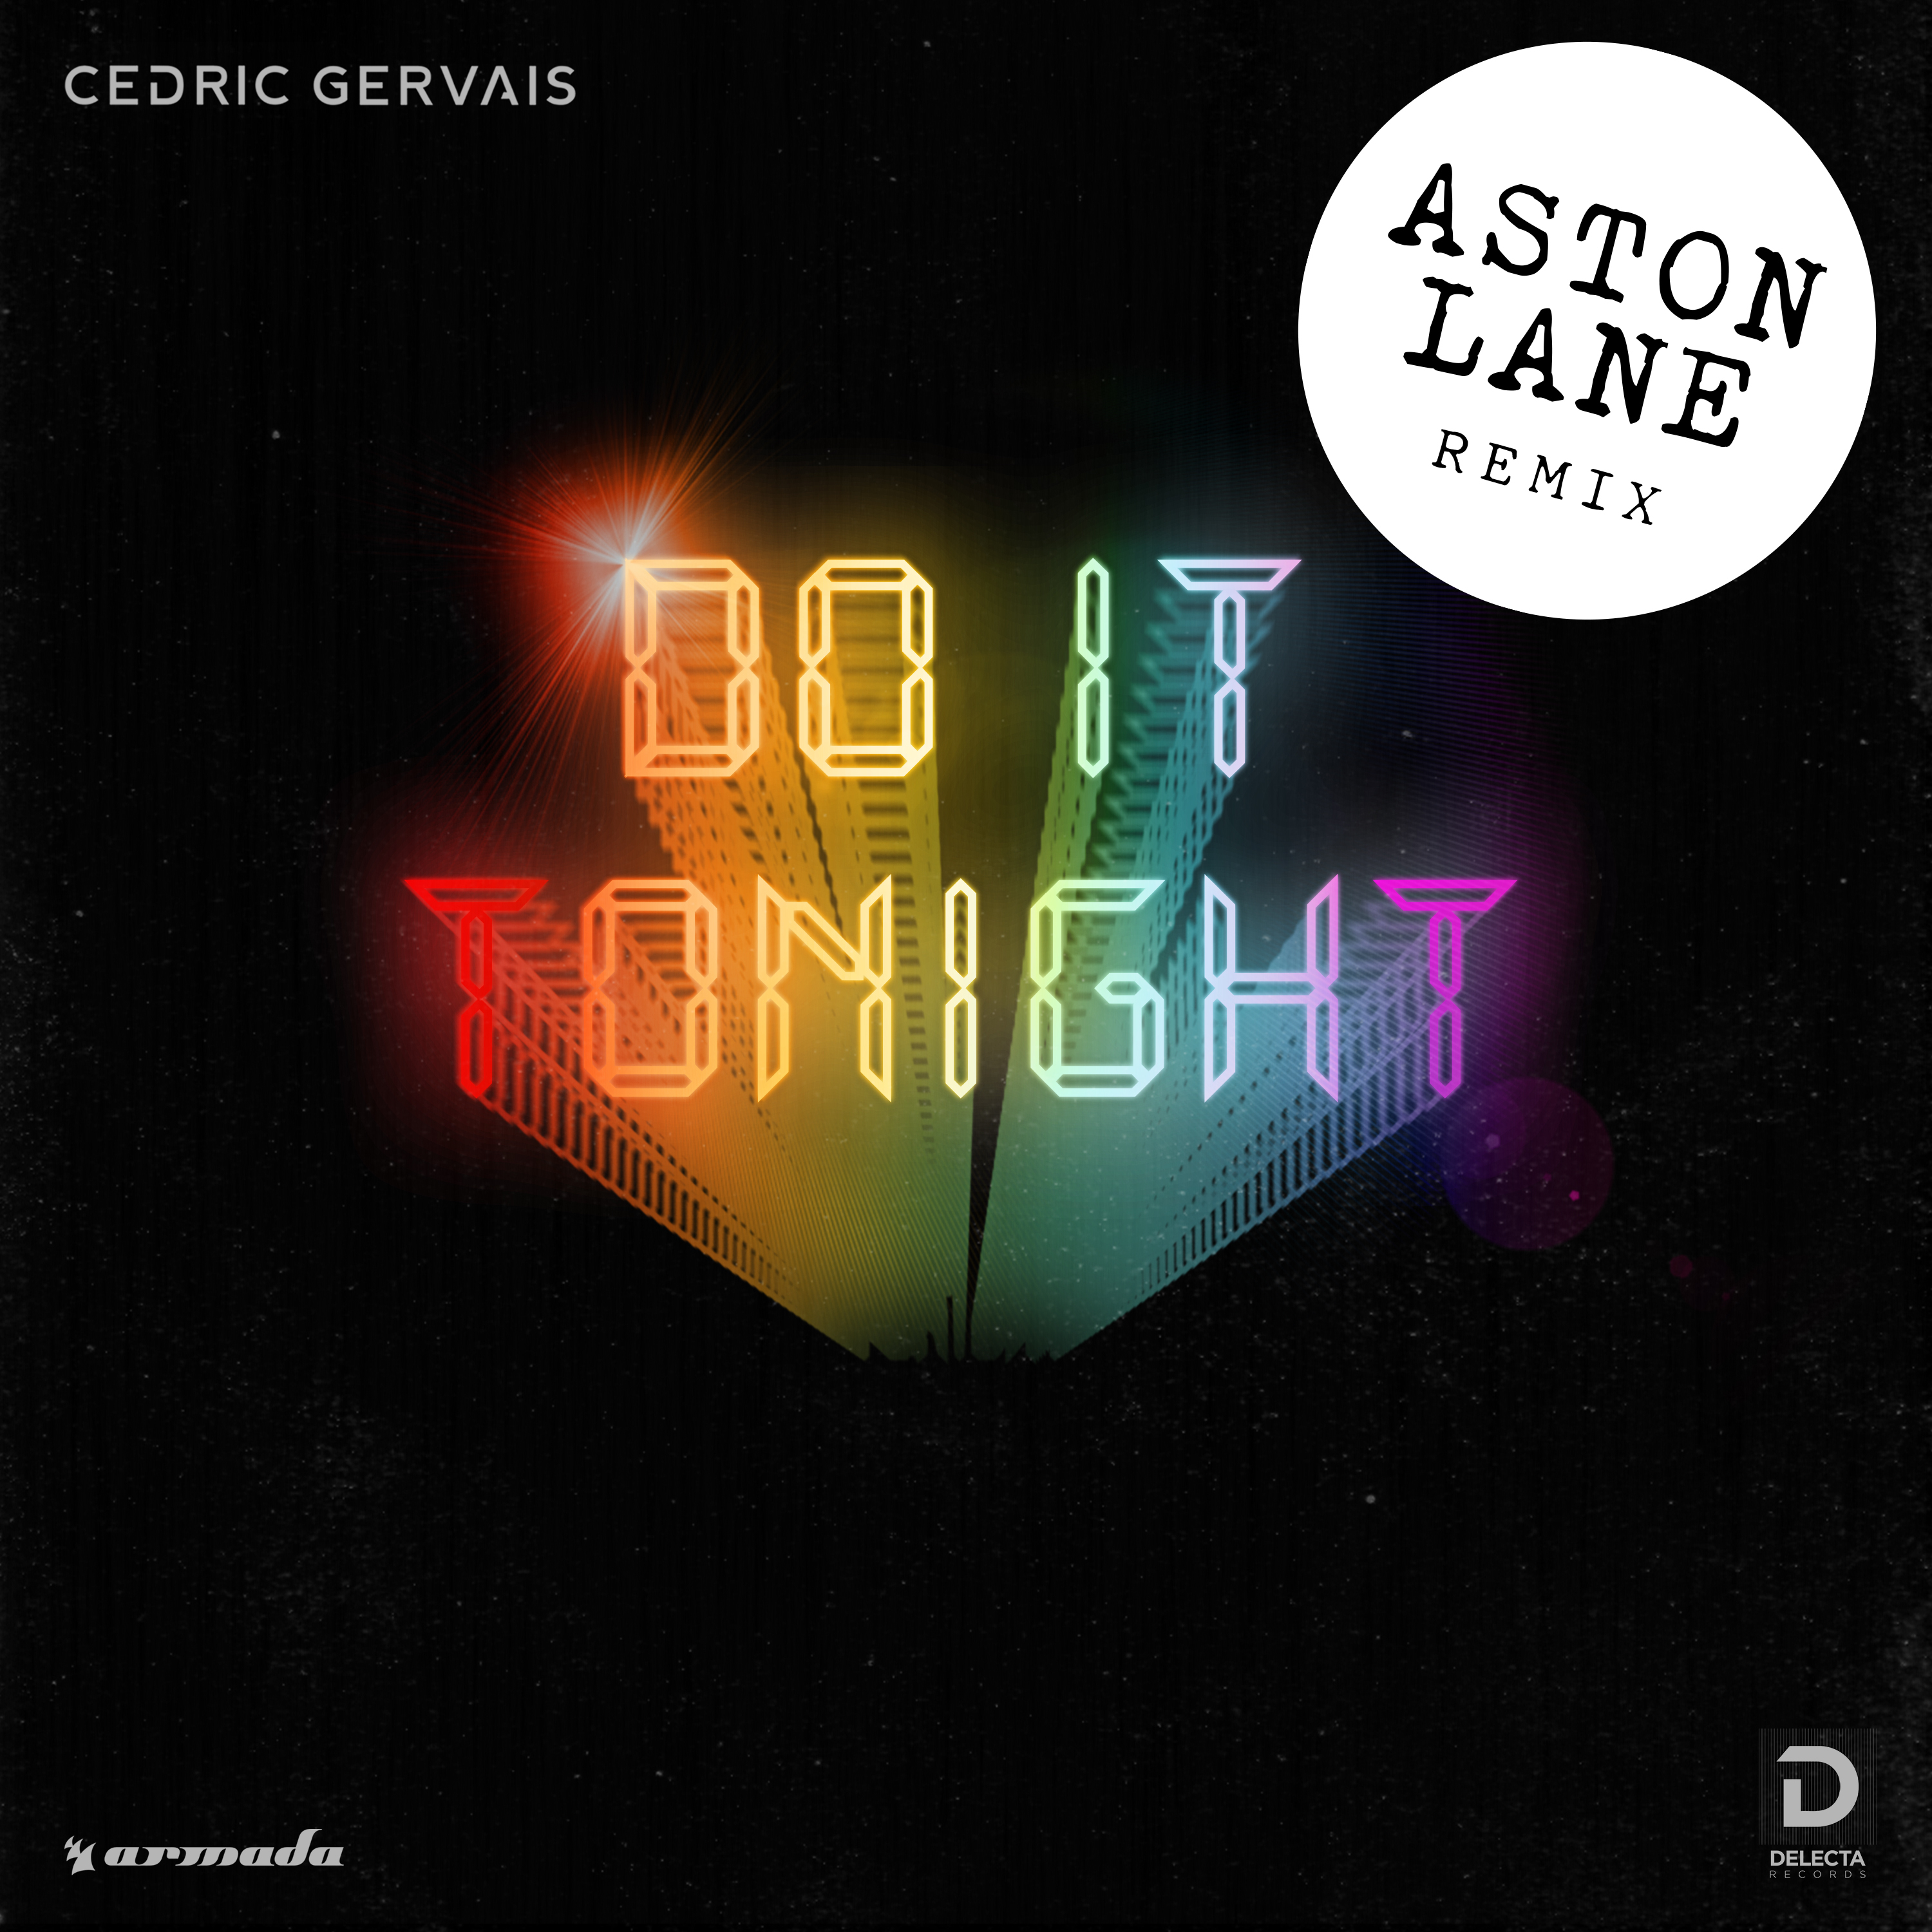 Do It Tonight (Aston Lane Remix)